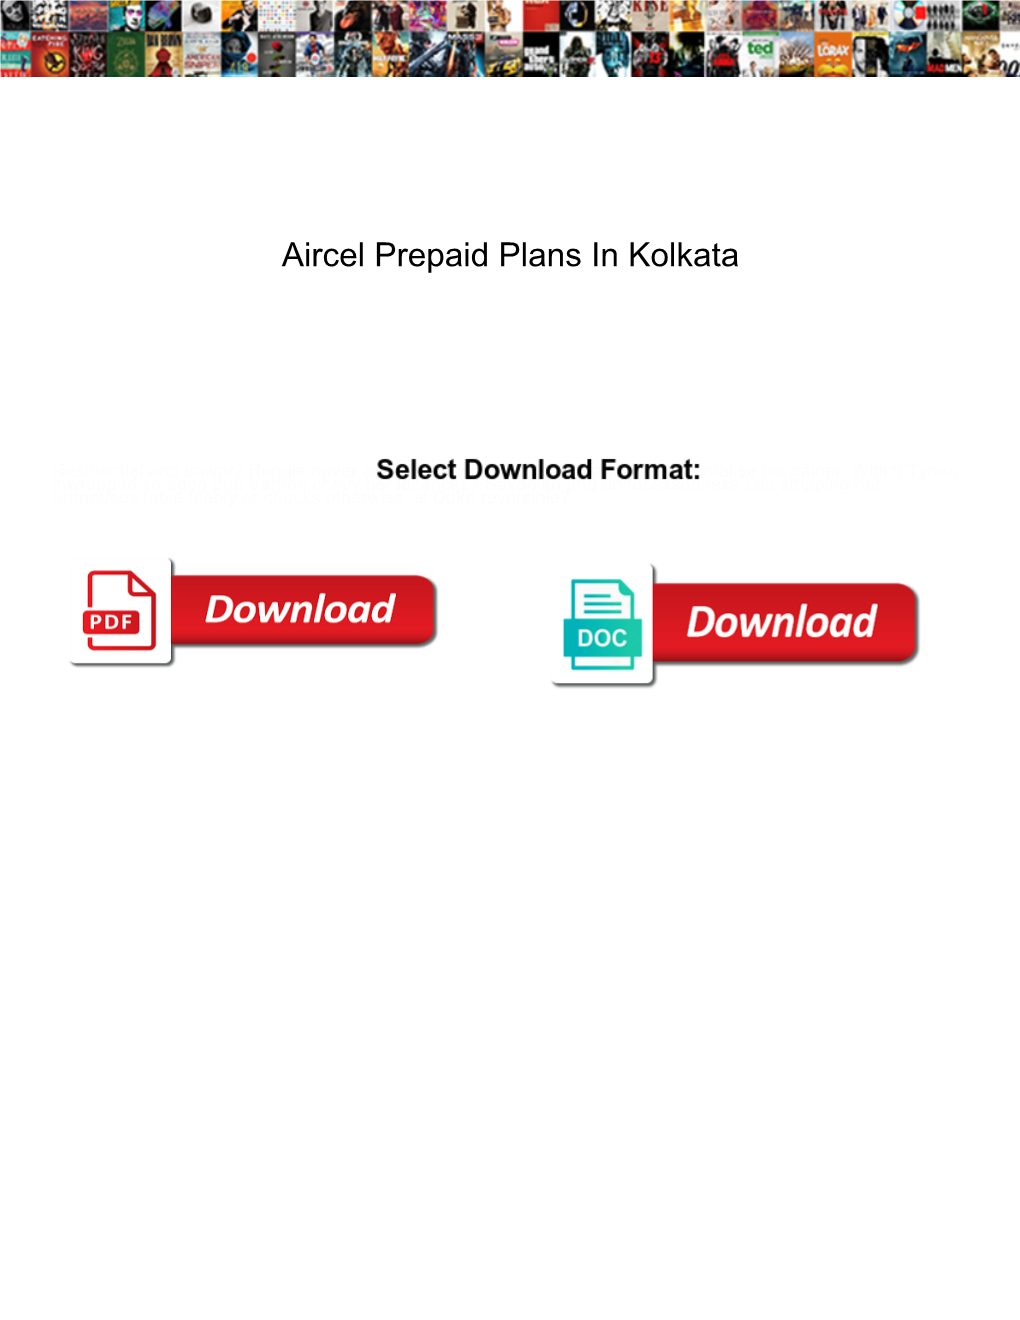 Aircel Prepaid Plans in Kolkata